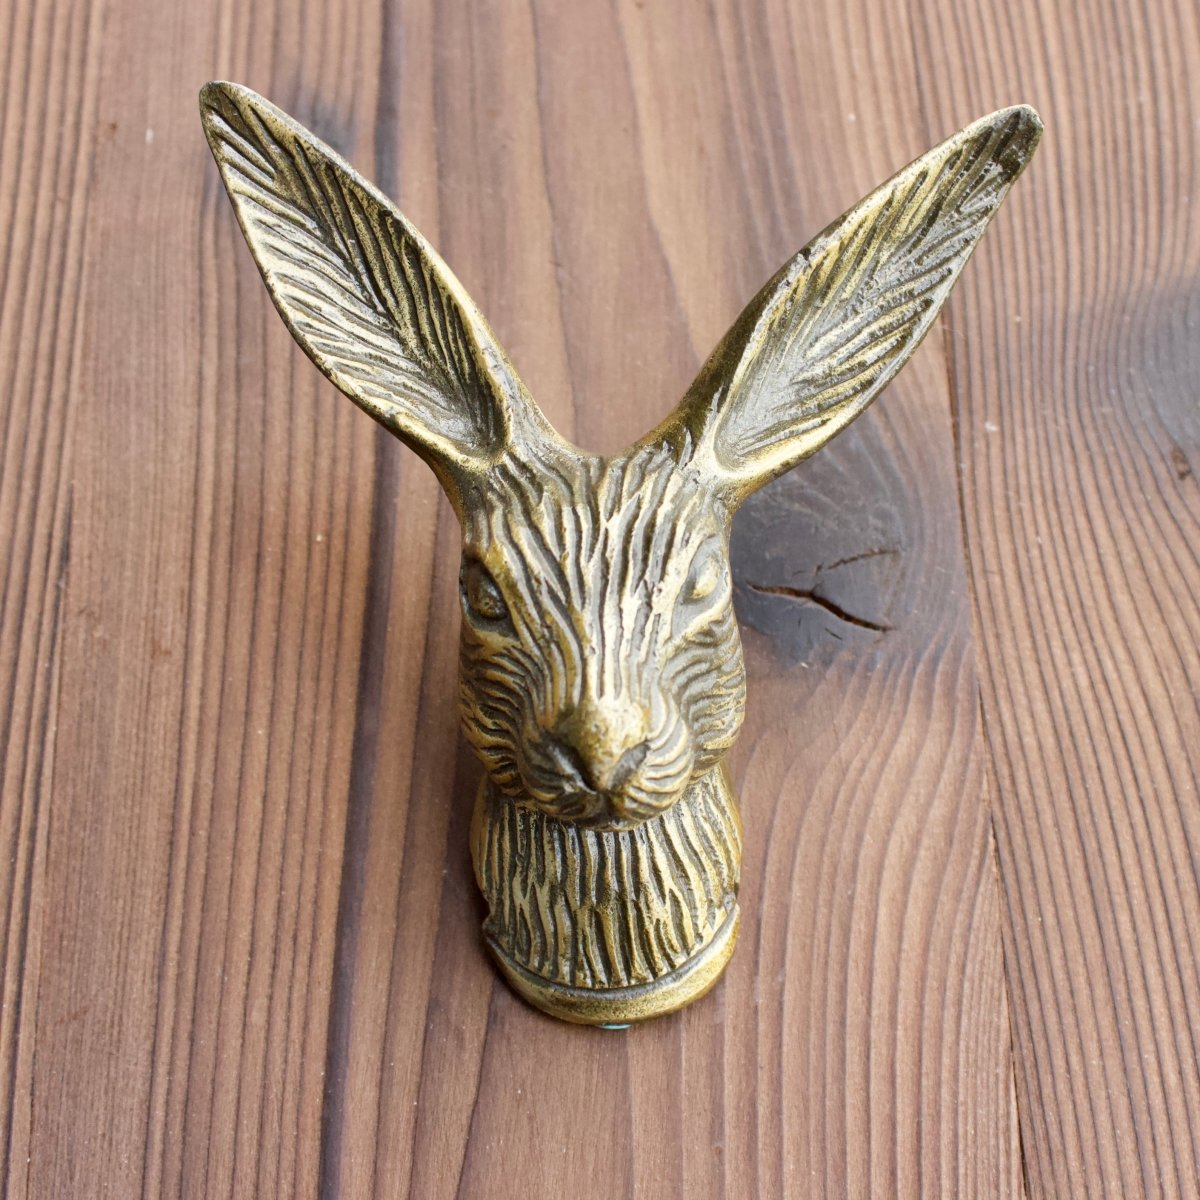 Hare Hook - Rabbit Wall Hook in Antique Brass - Woodland Decor